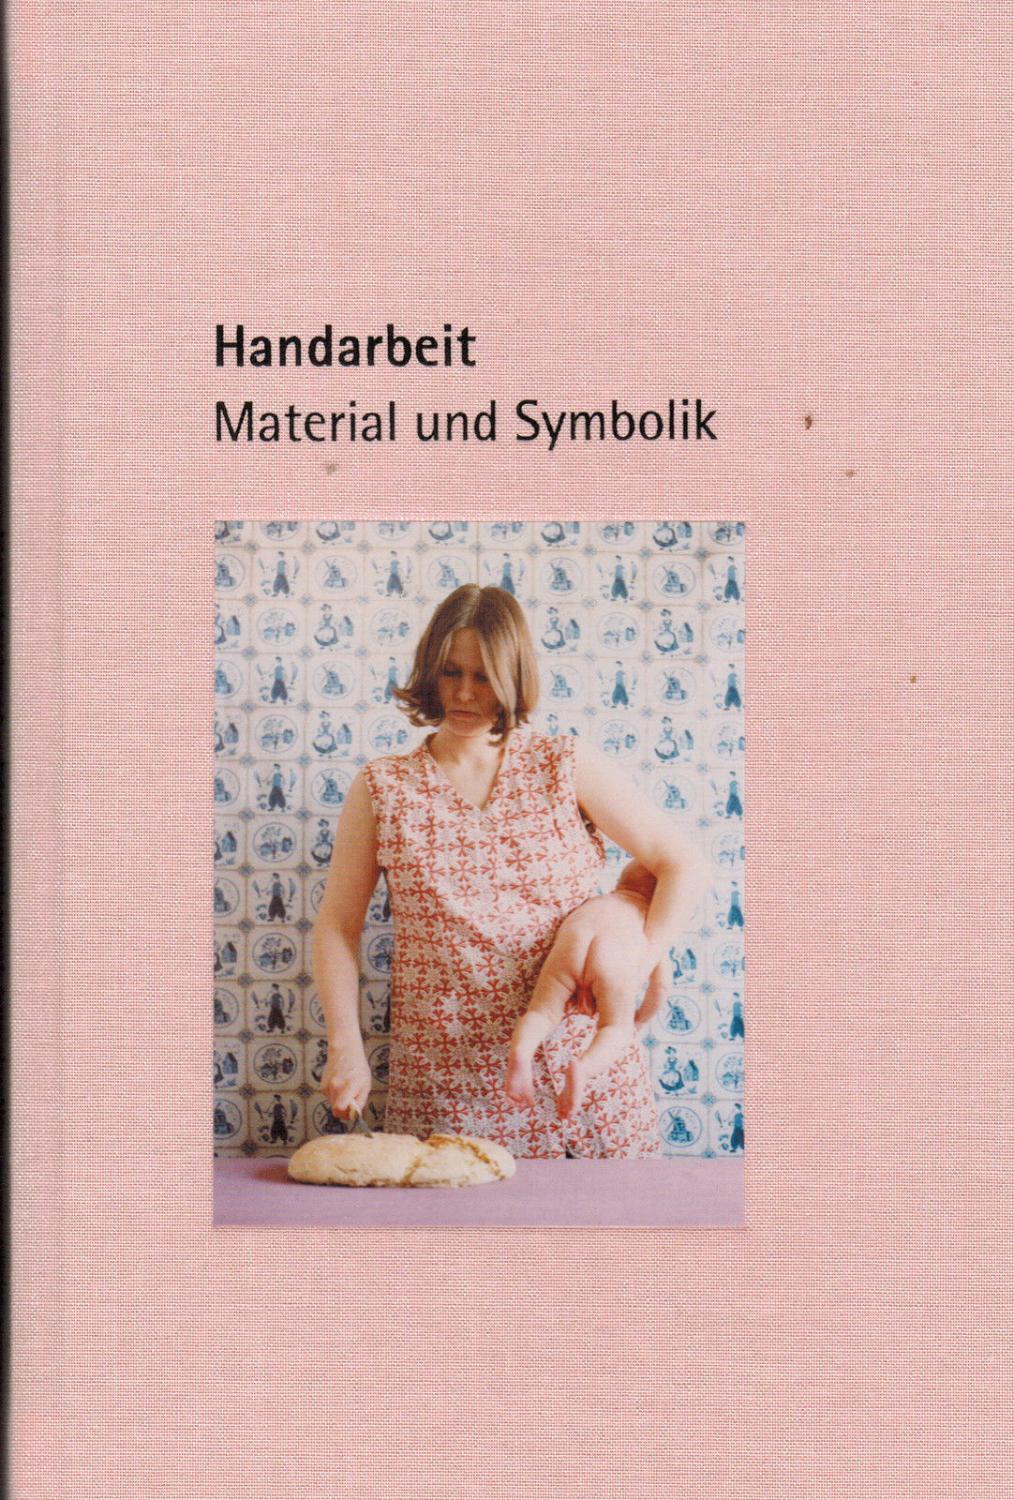 Handarbeit. Material und Symbol - Sadowsky, Thorsten (Hrsg.)